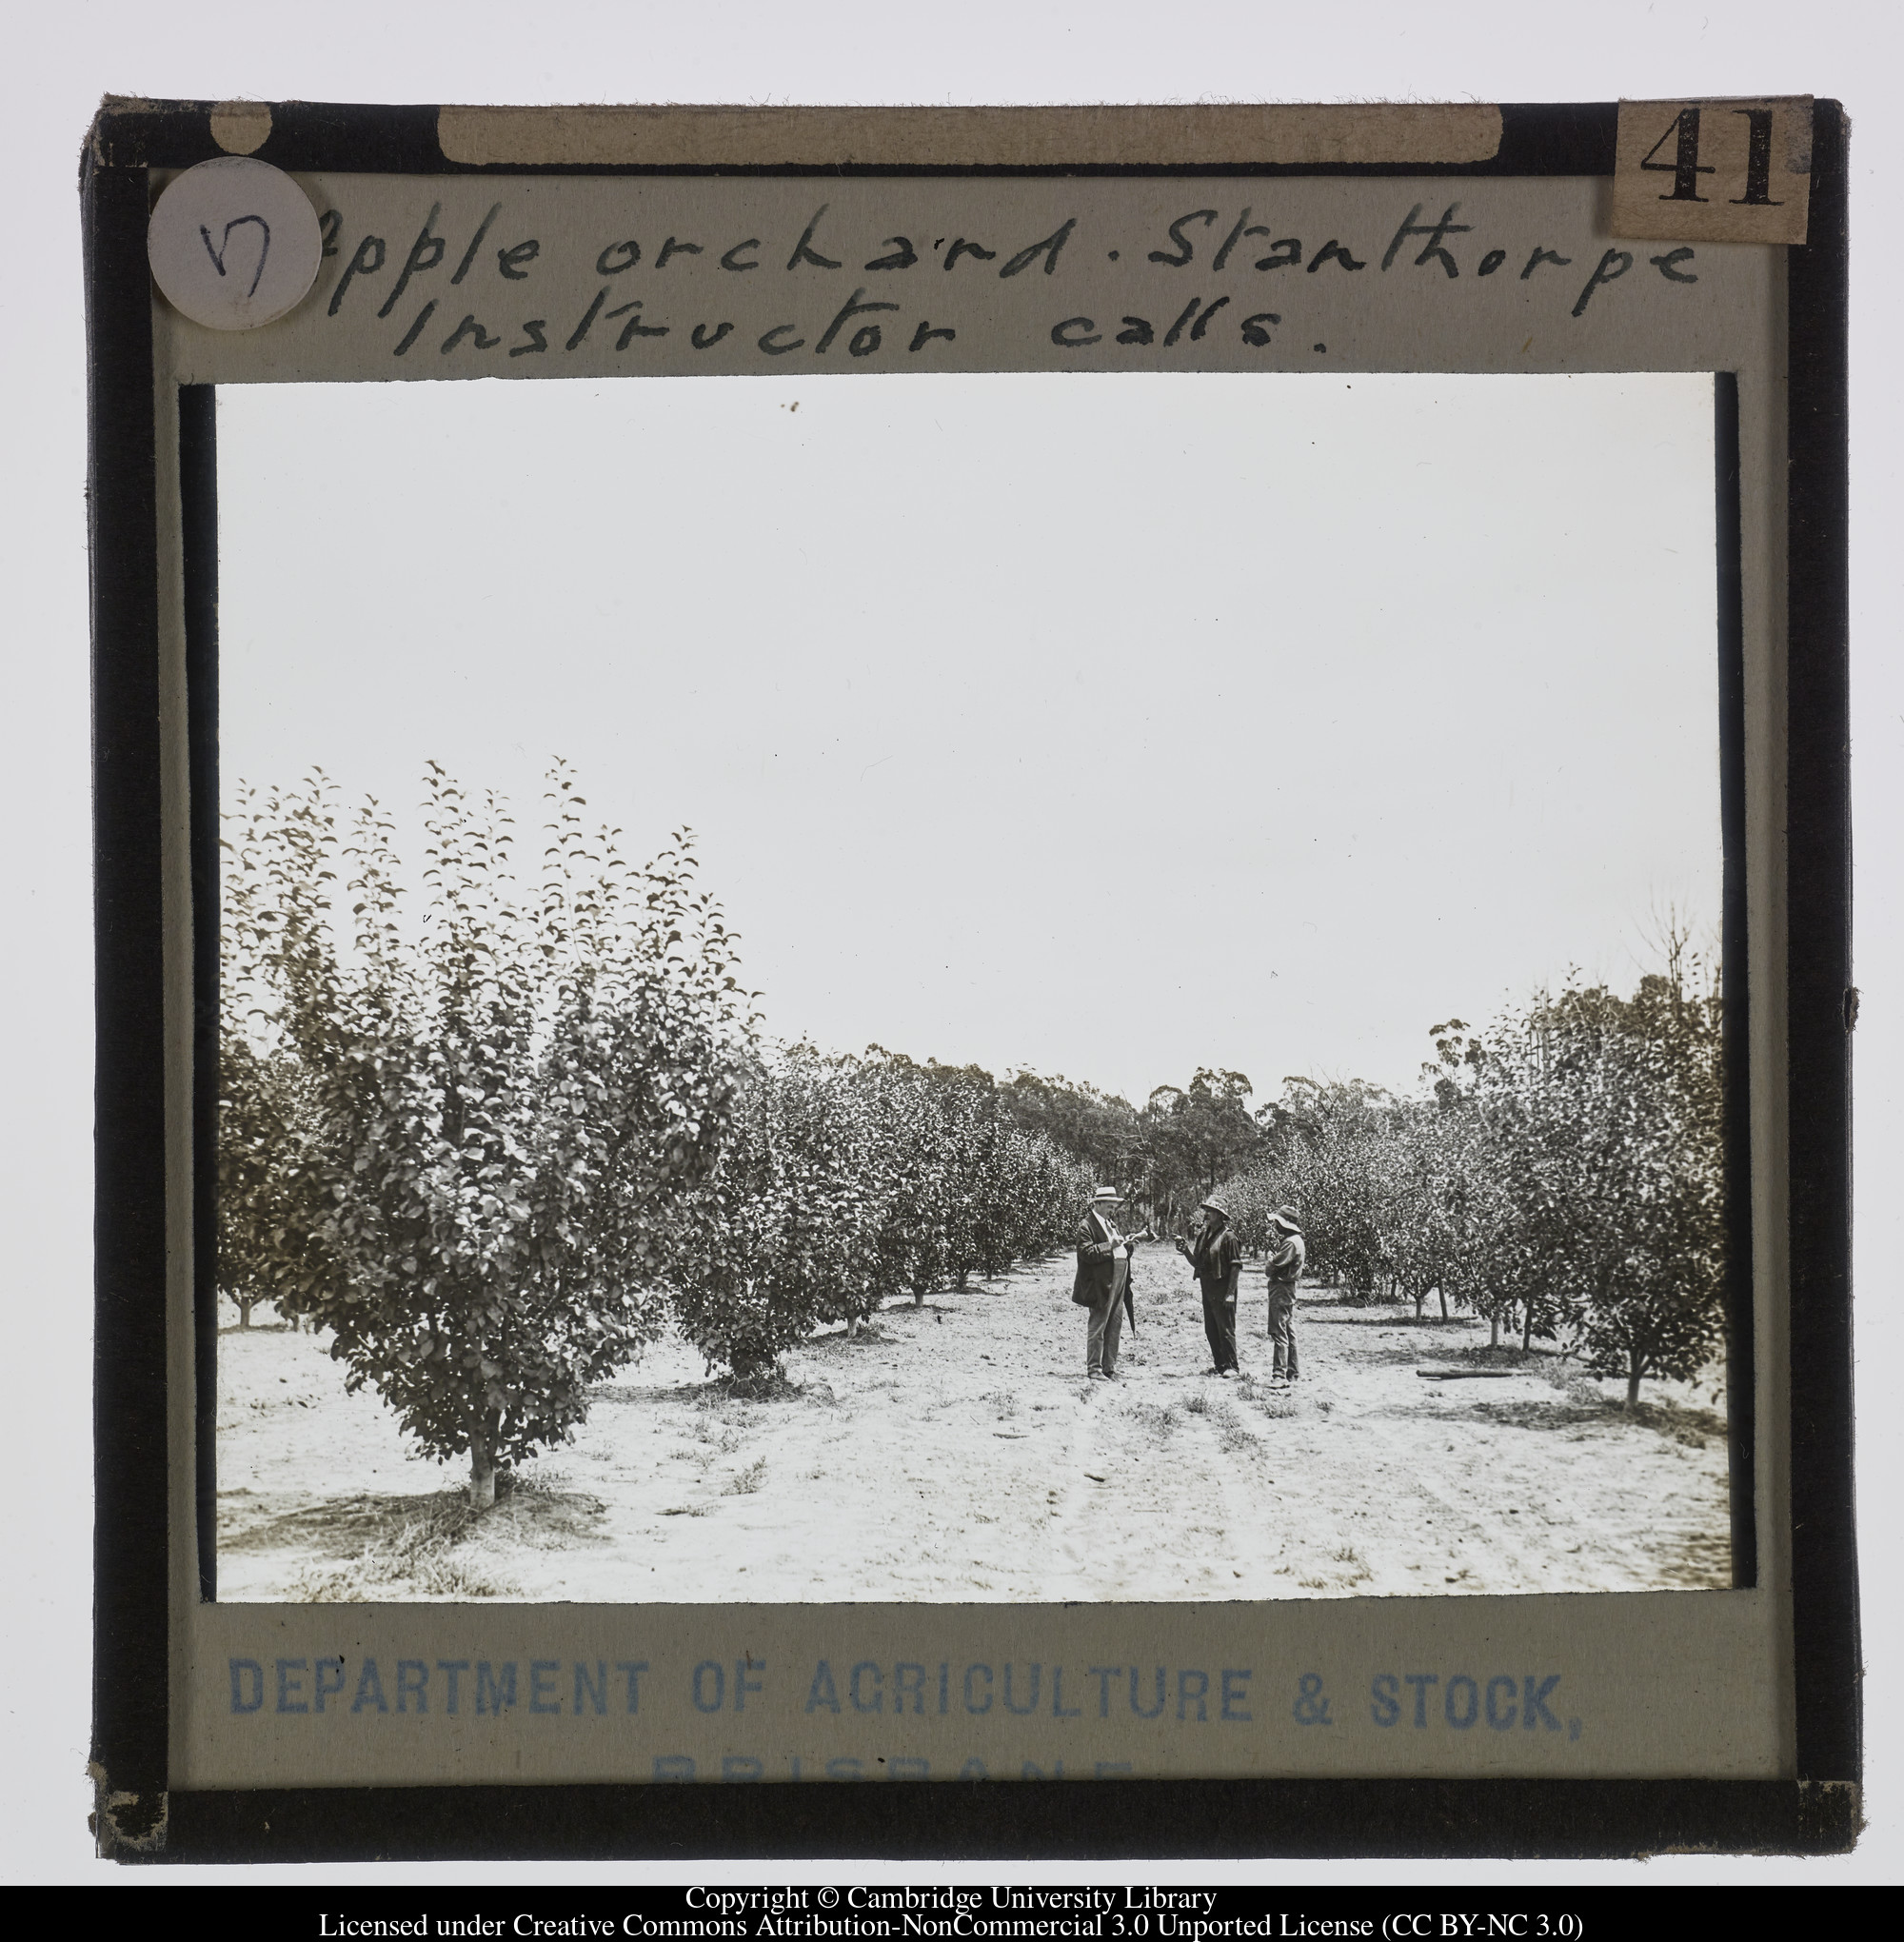 Apple Orchard, Stanthorpe. Instructor calls, 1900 - 1940